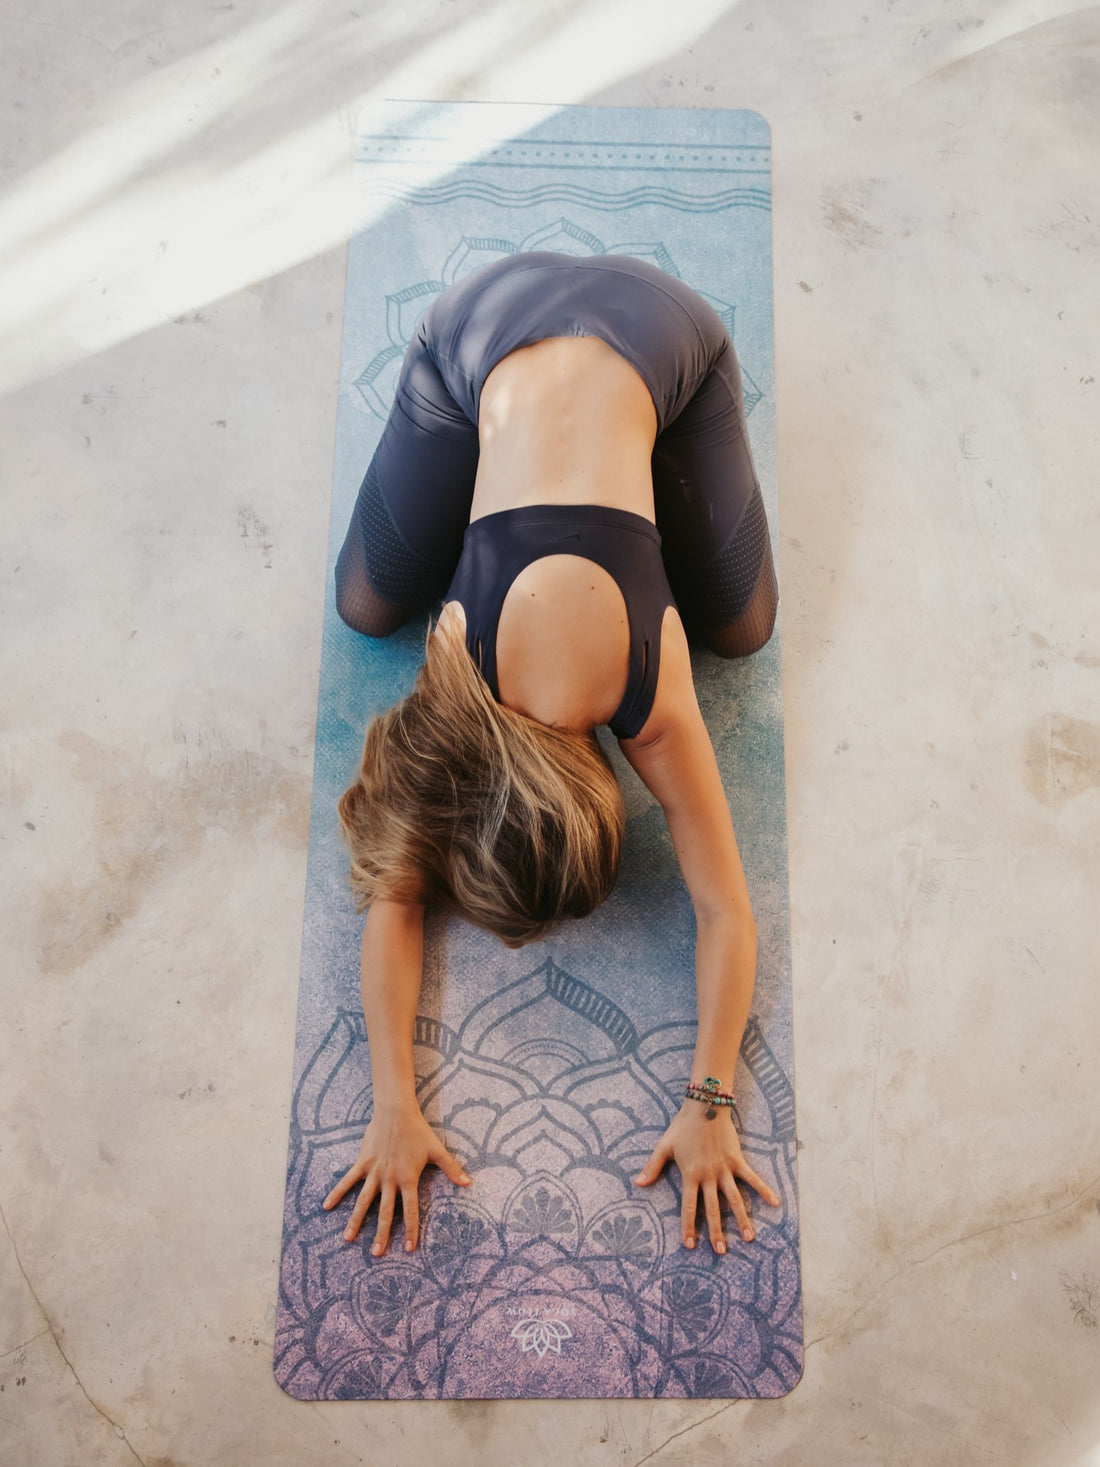 Professional and beginner yoga mats, accessories - shop